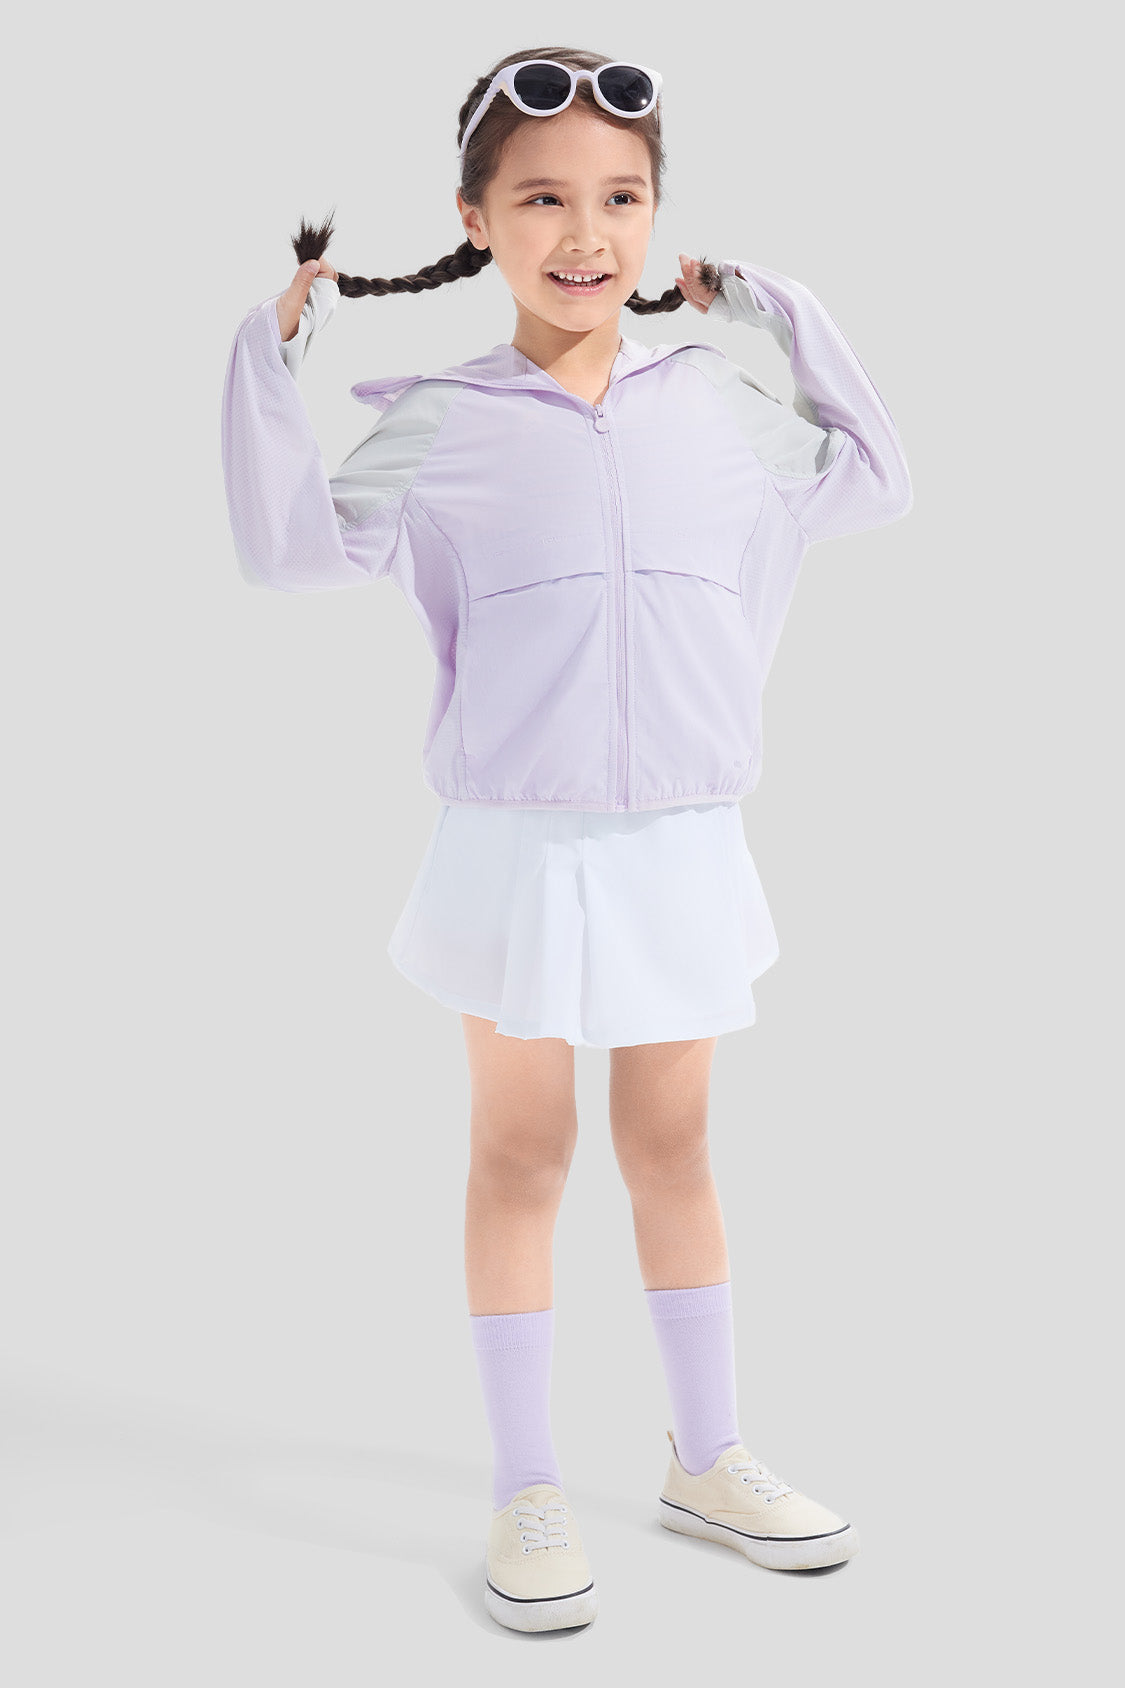 beneunder kids sports sunwear upf50 #color_frosty purple-galaxy grey